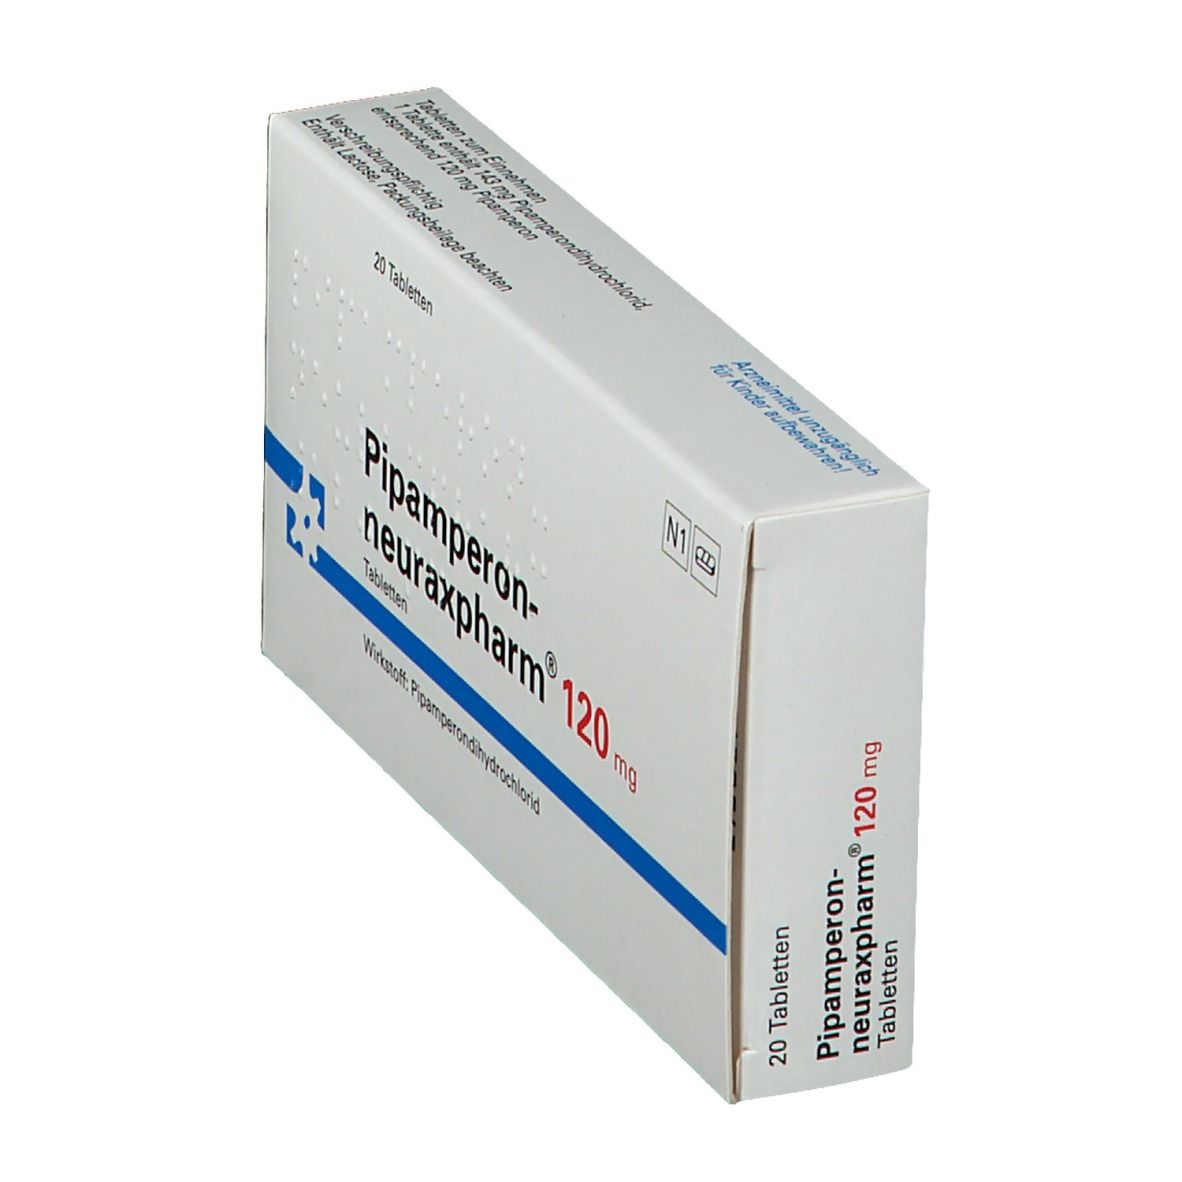 Pipamperon-neuraxpharm® 120 mg